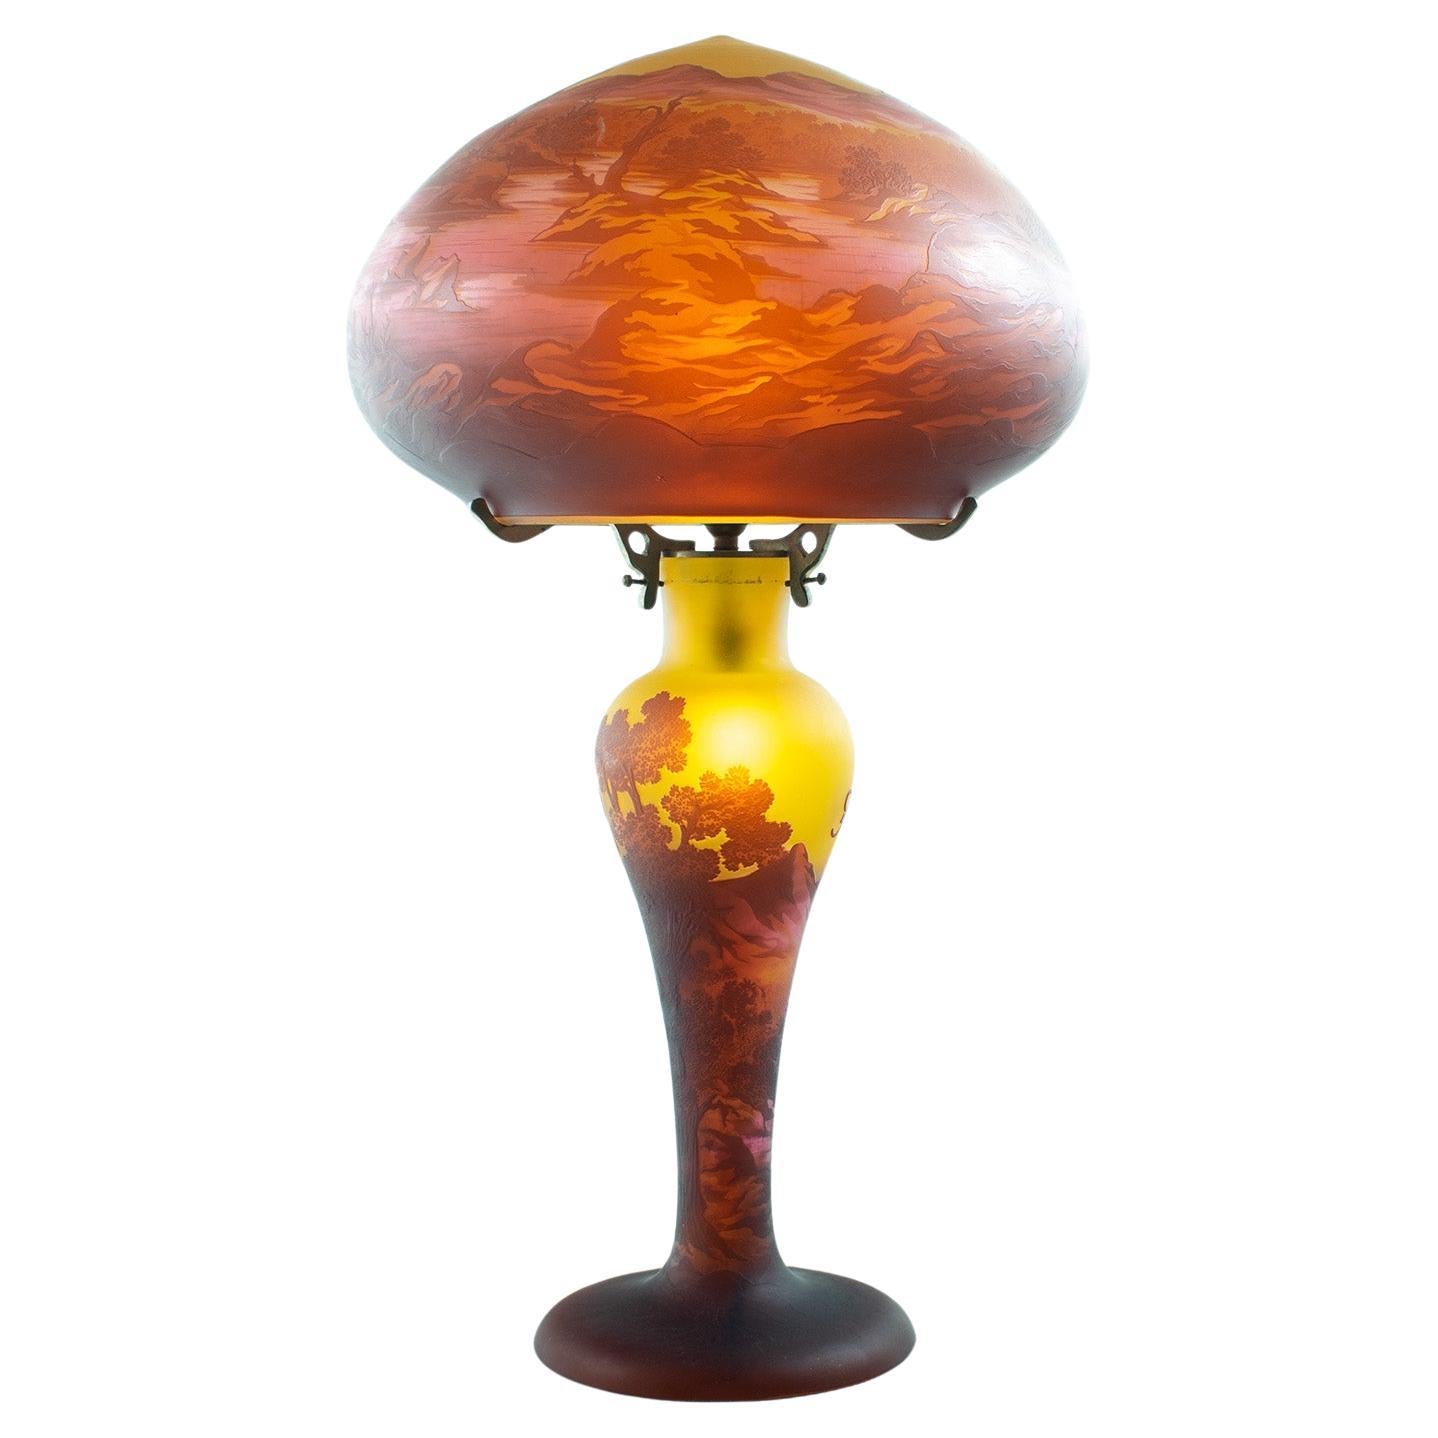 Gallè Tip - Impressive Large ART NOUVEAU MUSHROOM LAMP in multilayer glass For Sale